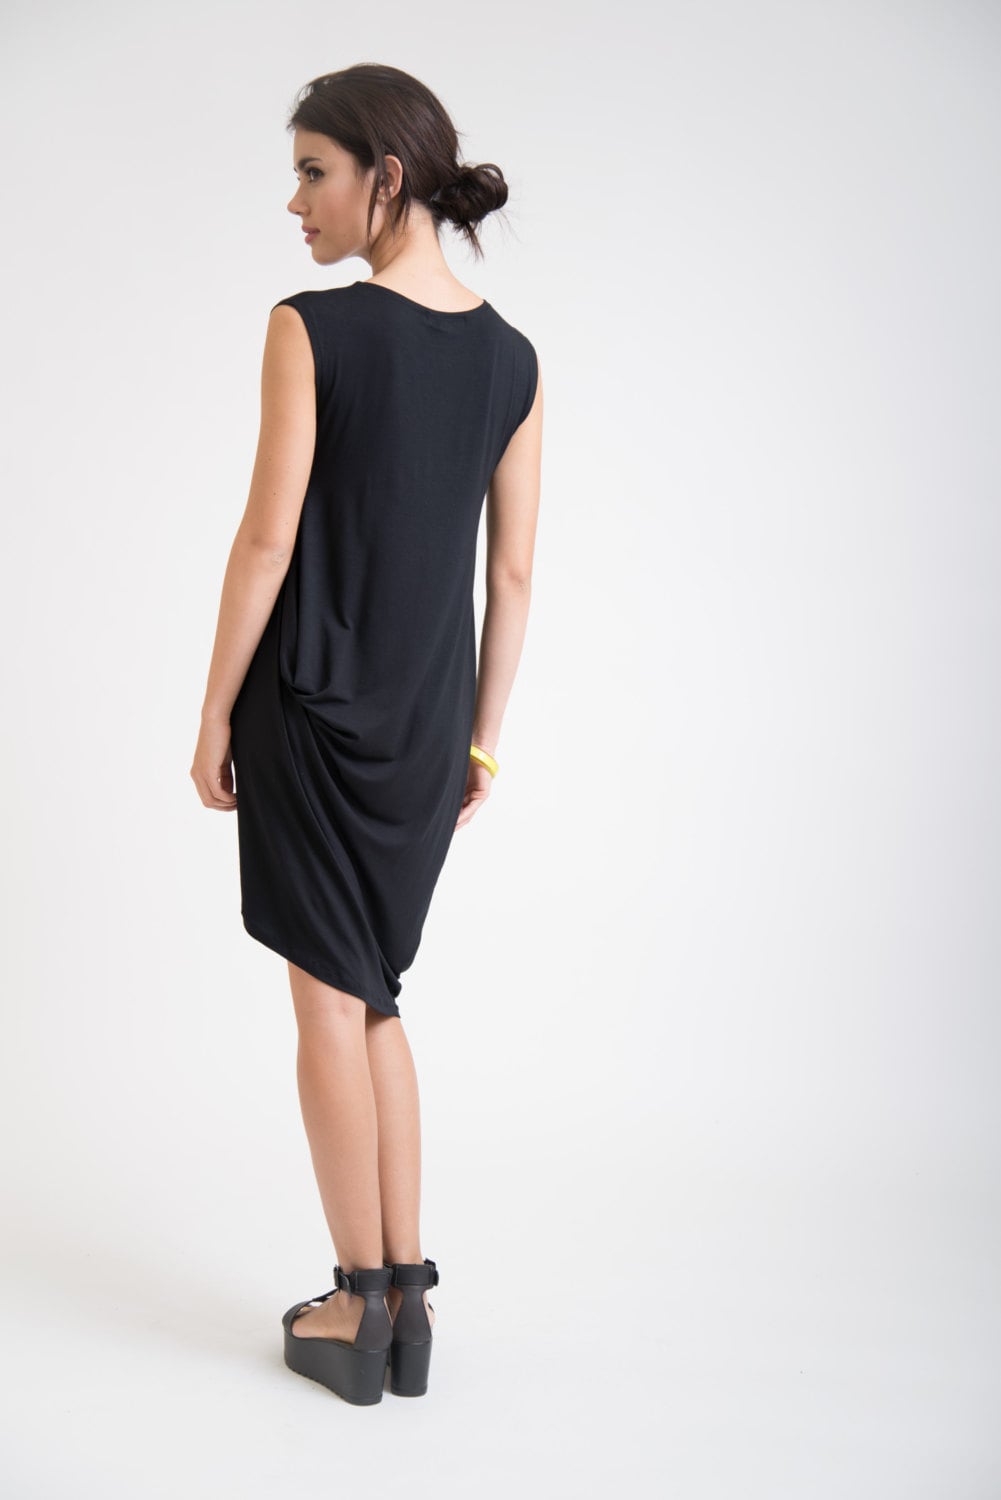 Party Dress / Black Dress / Oversized Tunic / Asymmetric Dress